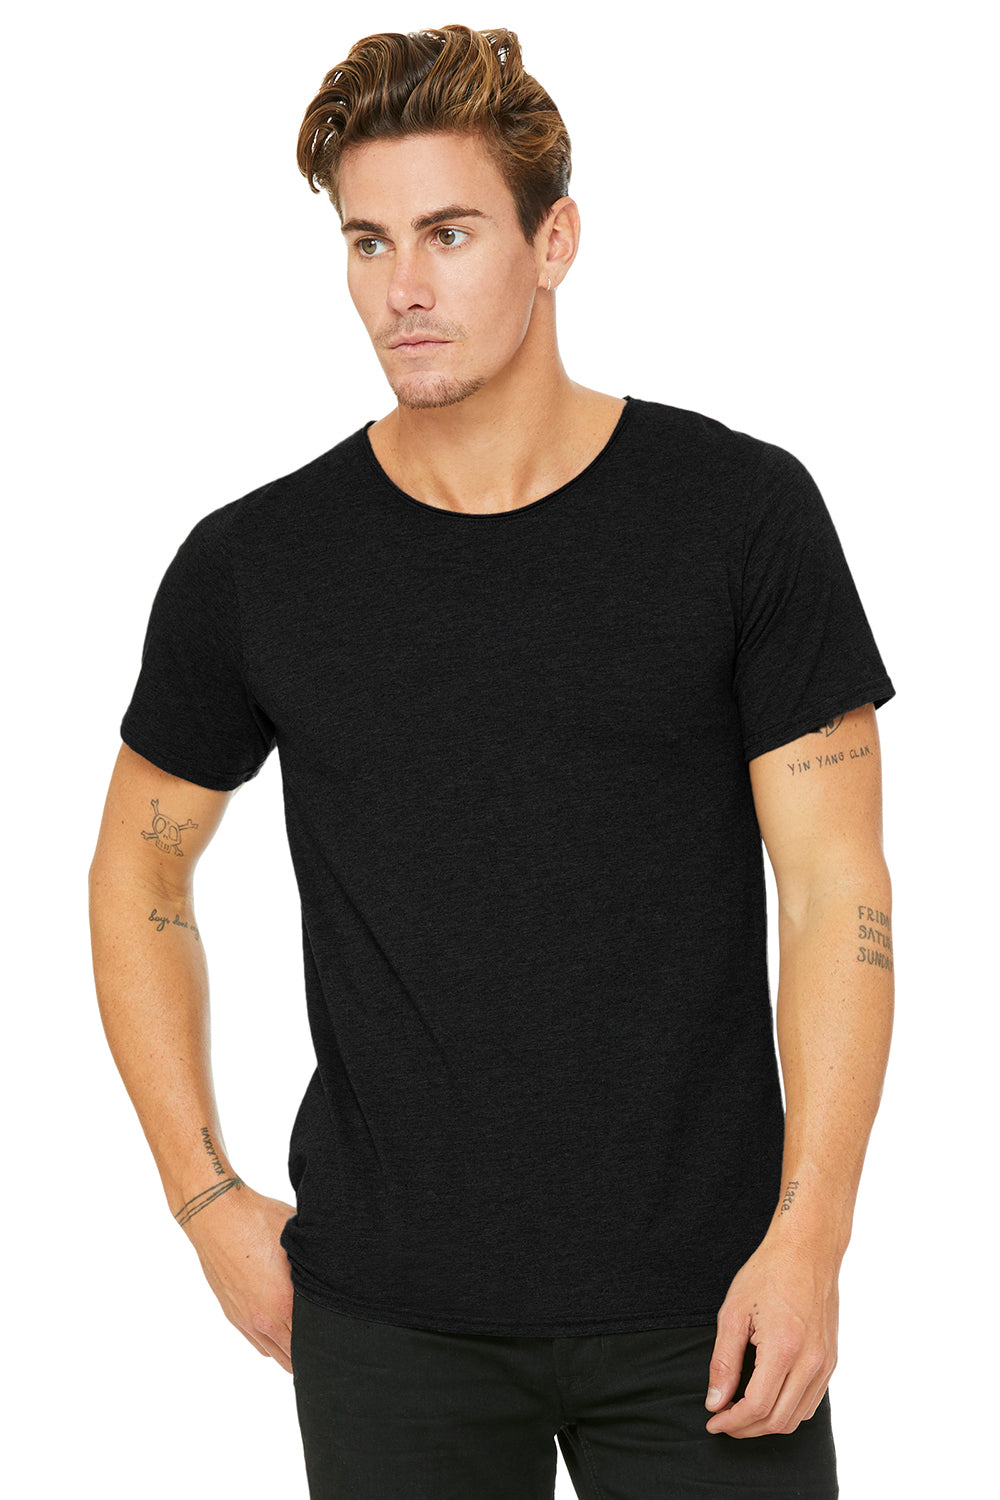 Bella + Canvas B3014/3014 Mens Jersey Short Sleeve Crewneck T-Shirt Black Model Front